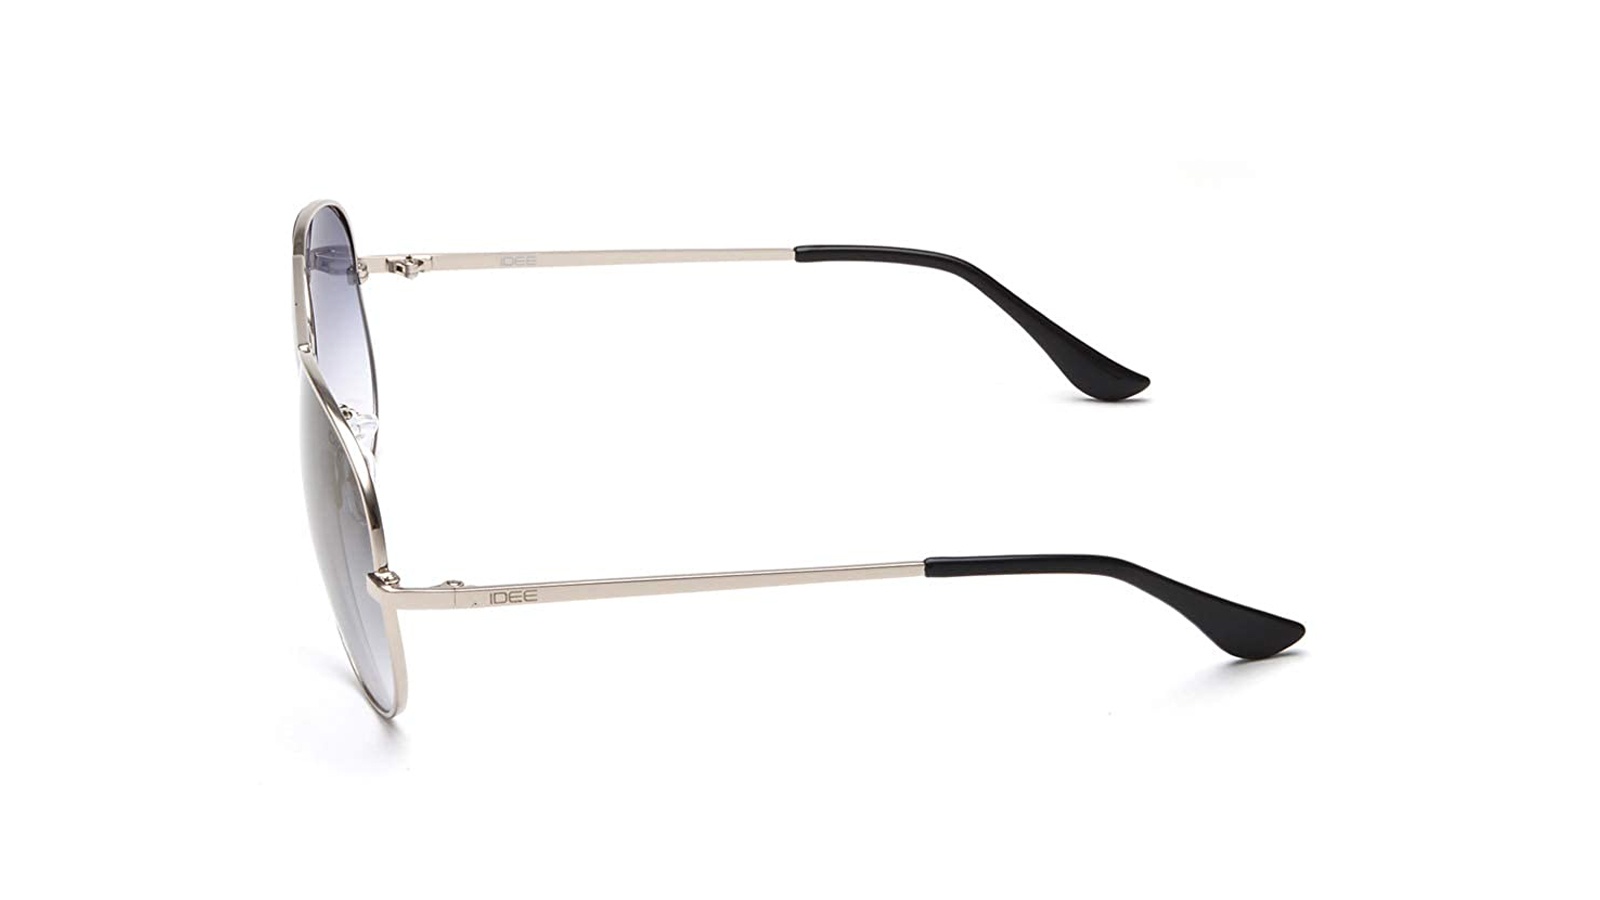 IDEE Sunglasses : Buy IDEE Smoke Gradient Lens Pilot Sunglass Full